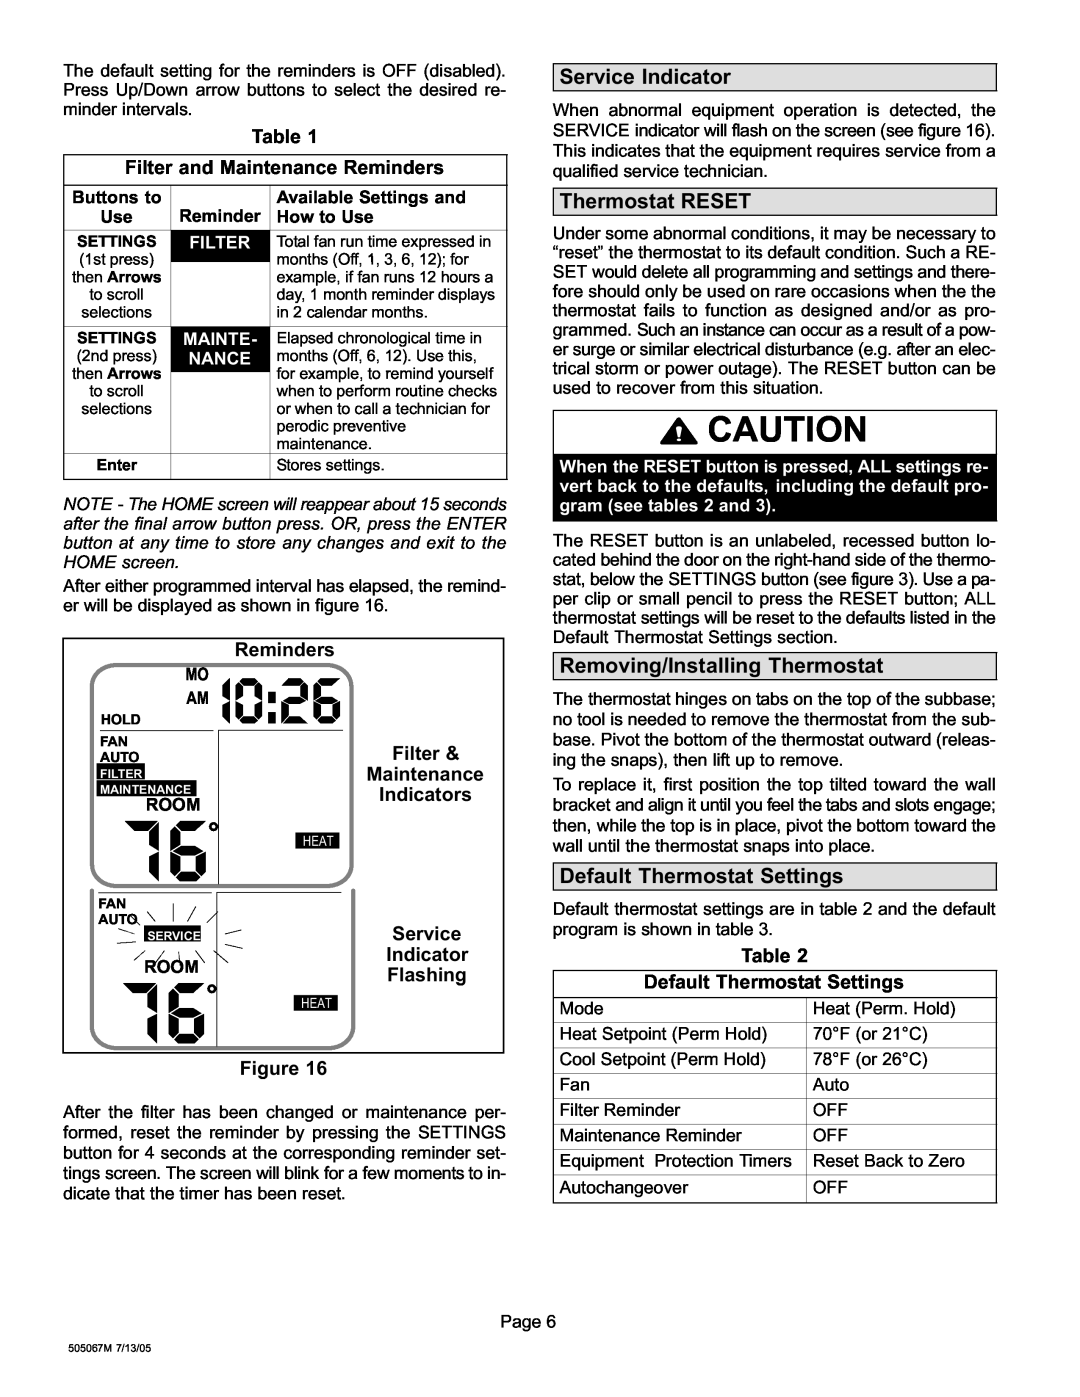 Lennox International Inc 51M37 I0, Service Indicator, Thermostat RESET, Removing/Installing Thermostat, Reminders 